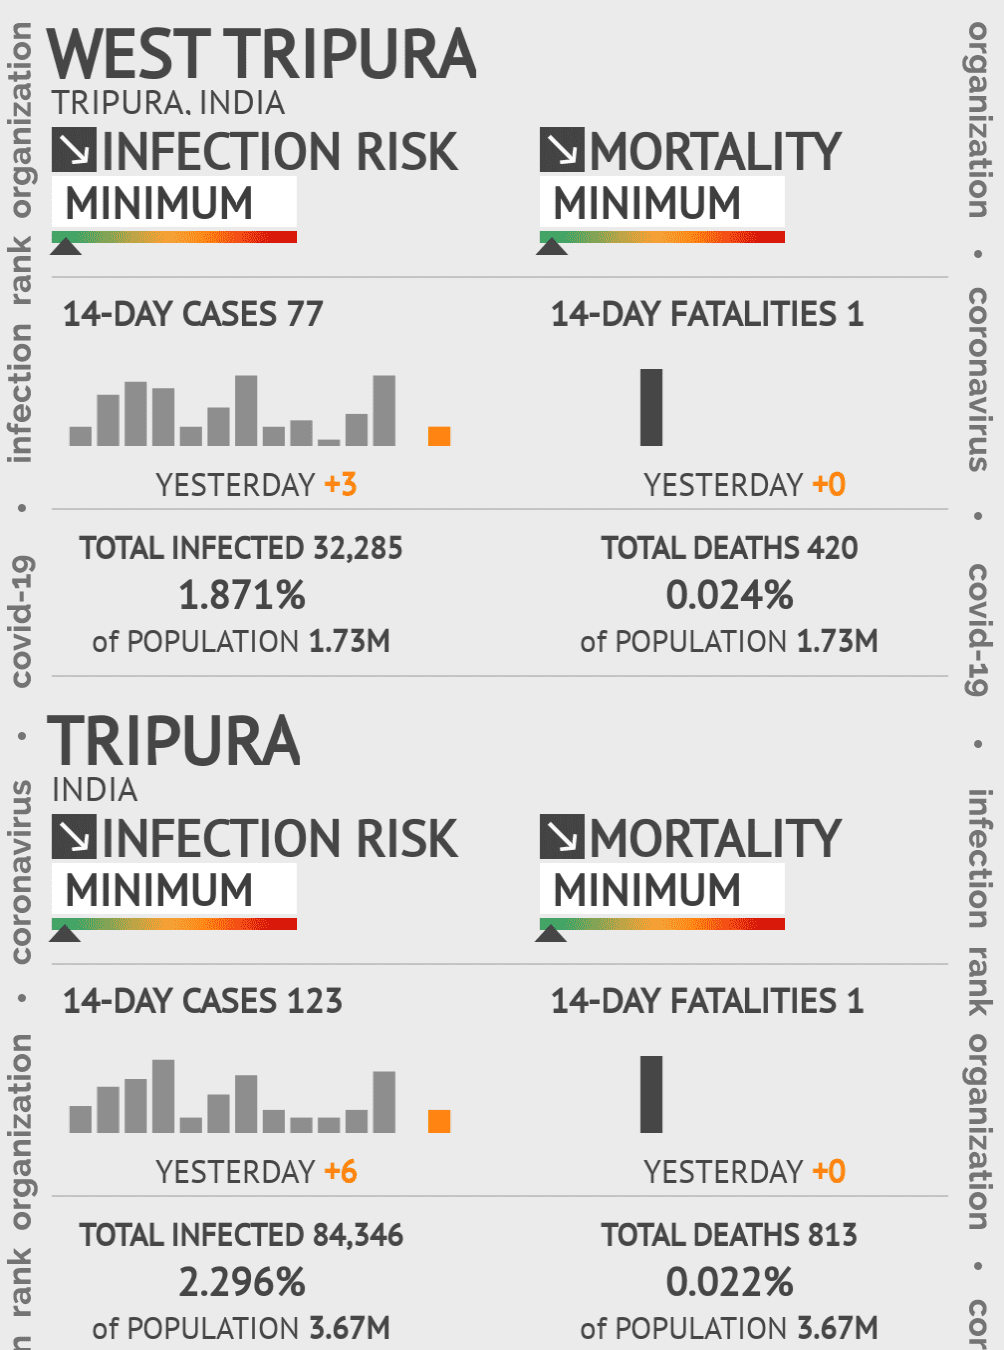 West Tripura Coronavirus Covid-19 Risk of Infection on October 20, 2021